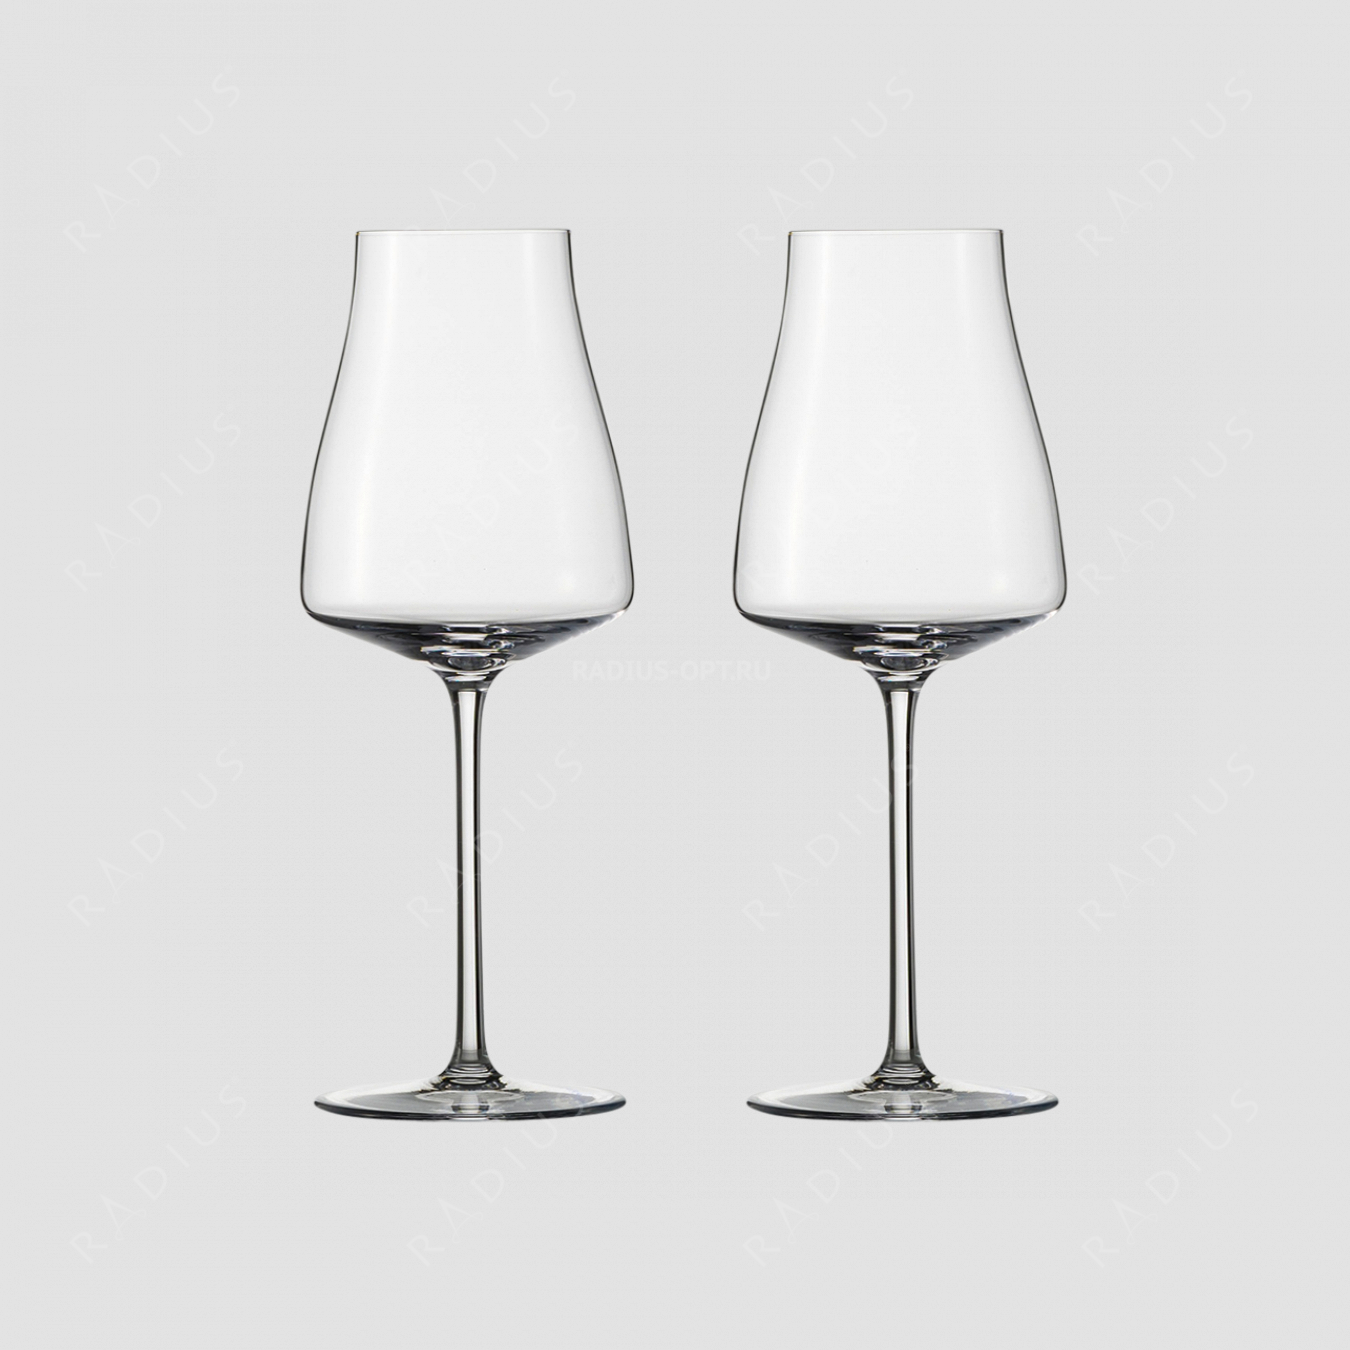 Набор бокалов для белого вина RIESLING GRAND CRU, ручная работа, объем 458 мл, 2 шт., серия The Moment, ZWIESEL GLAS, Германия